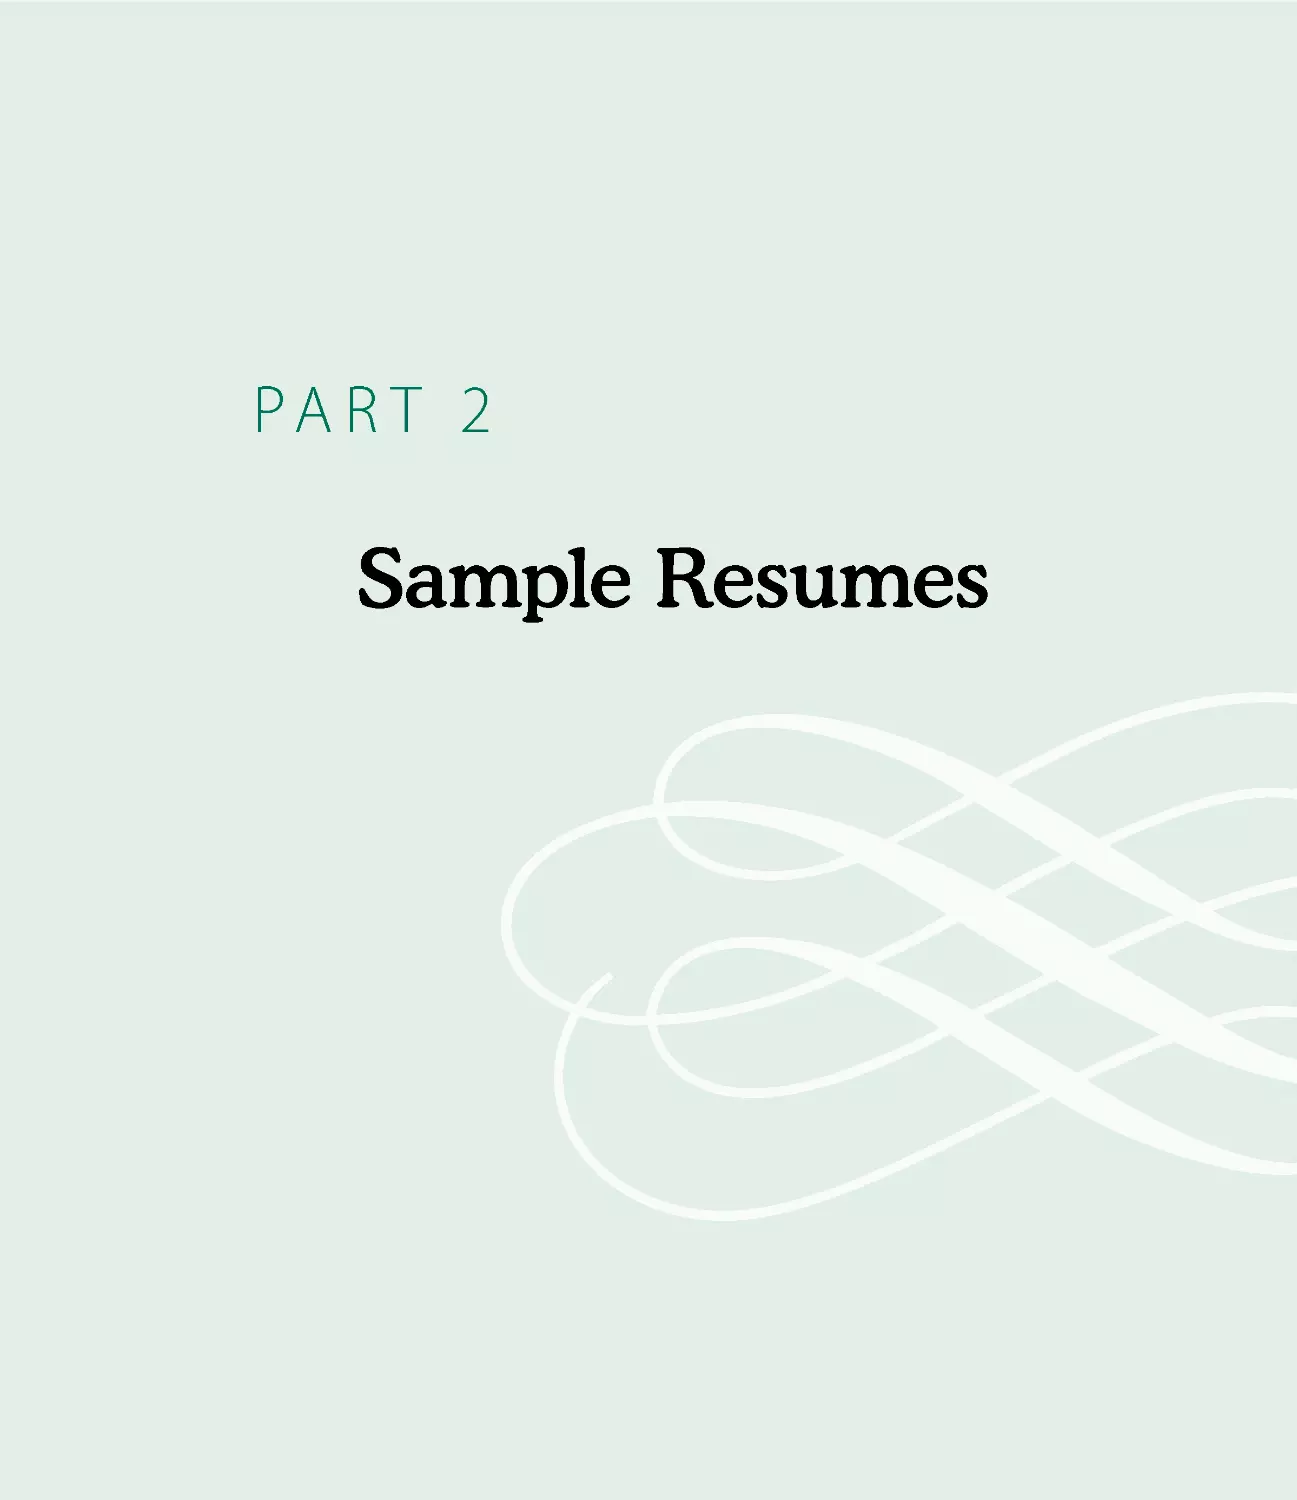 Part 2: Sample Resumes